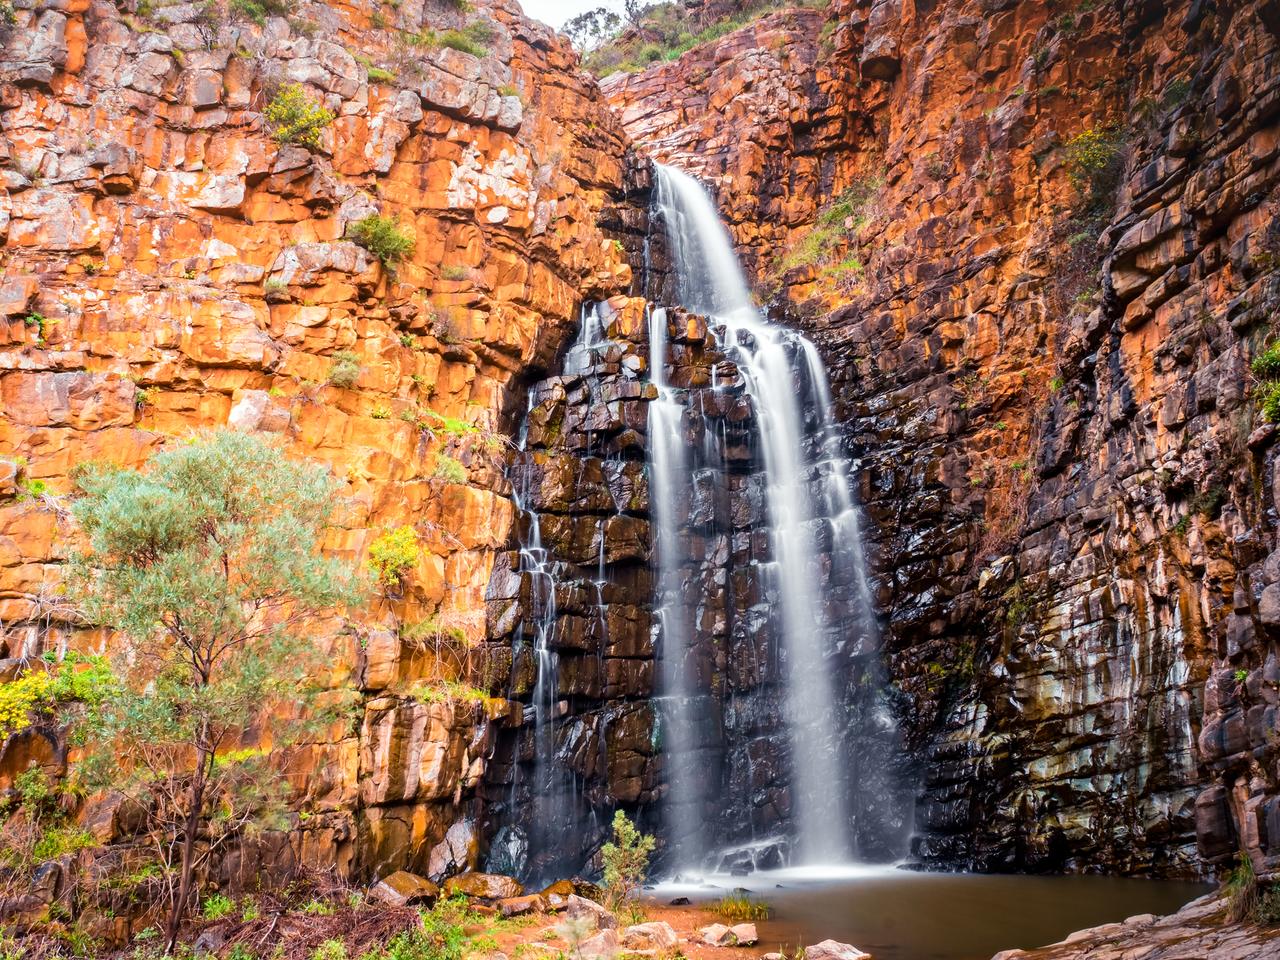 Morialta waterfall in South Australia